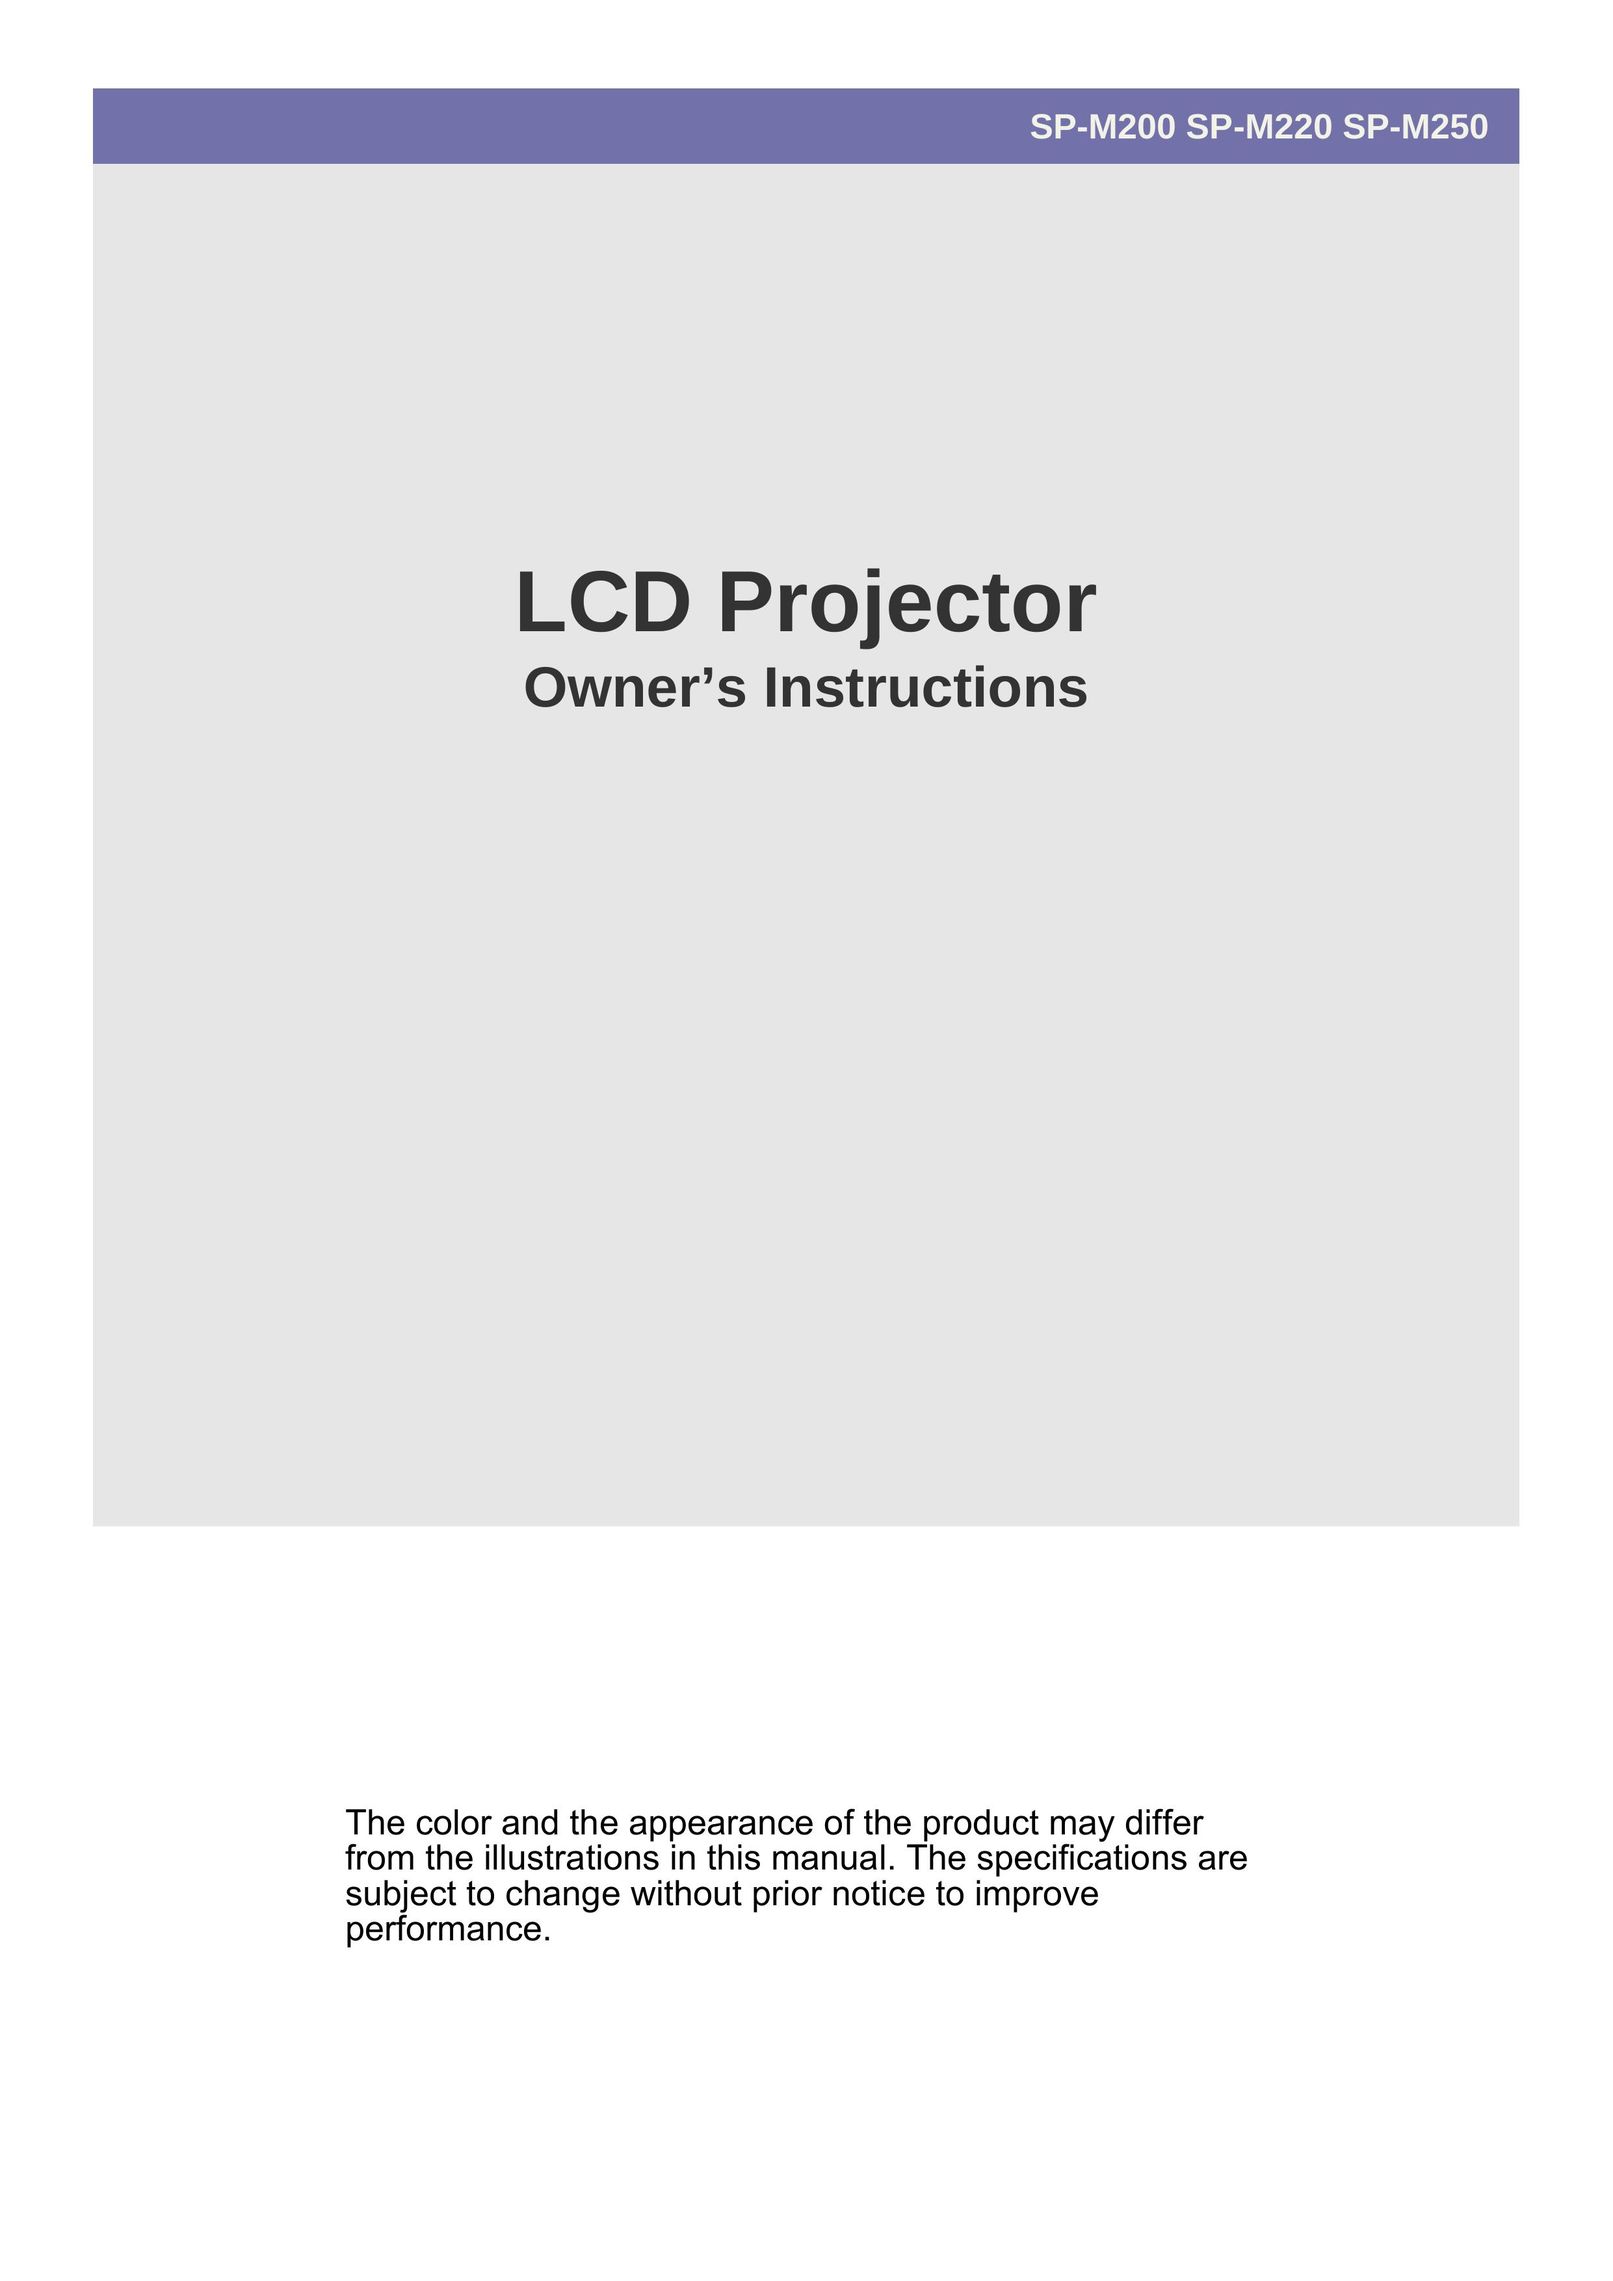 Samsung SP-M250 Projector User Manual